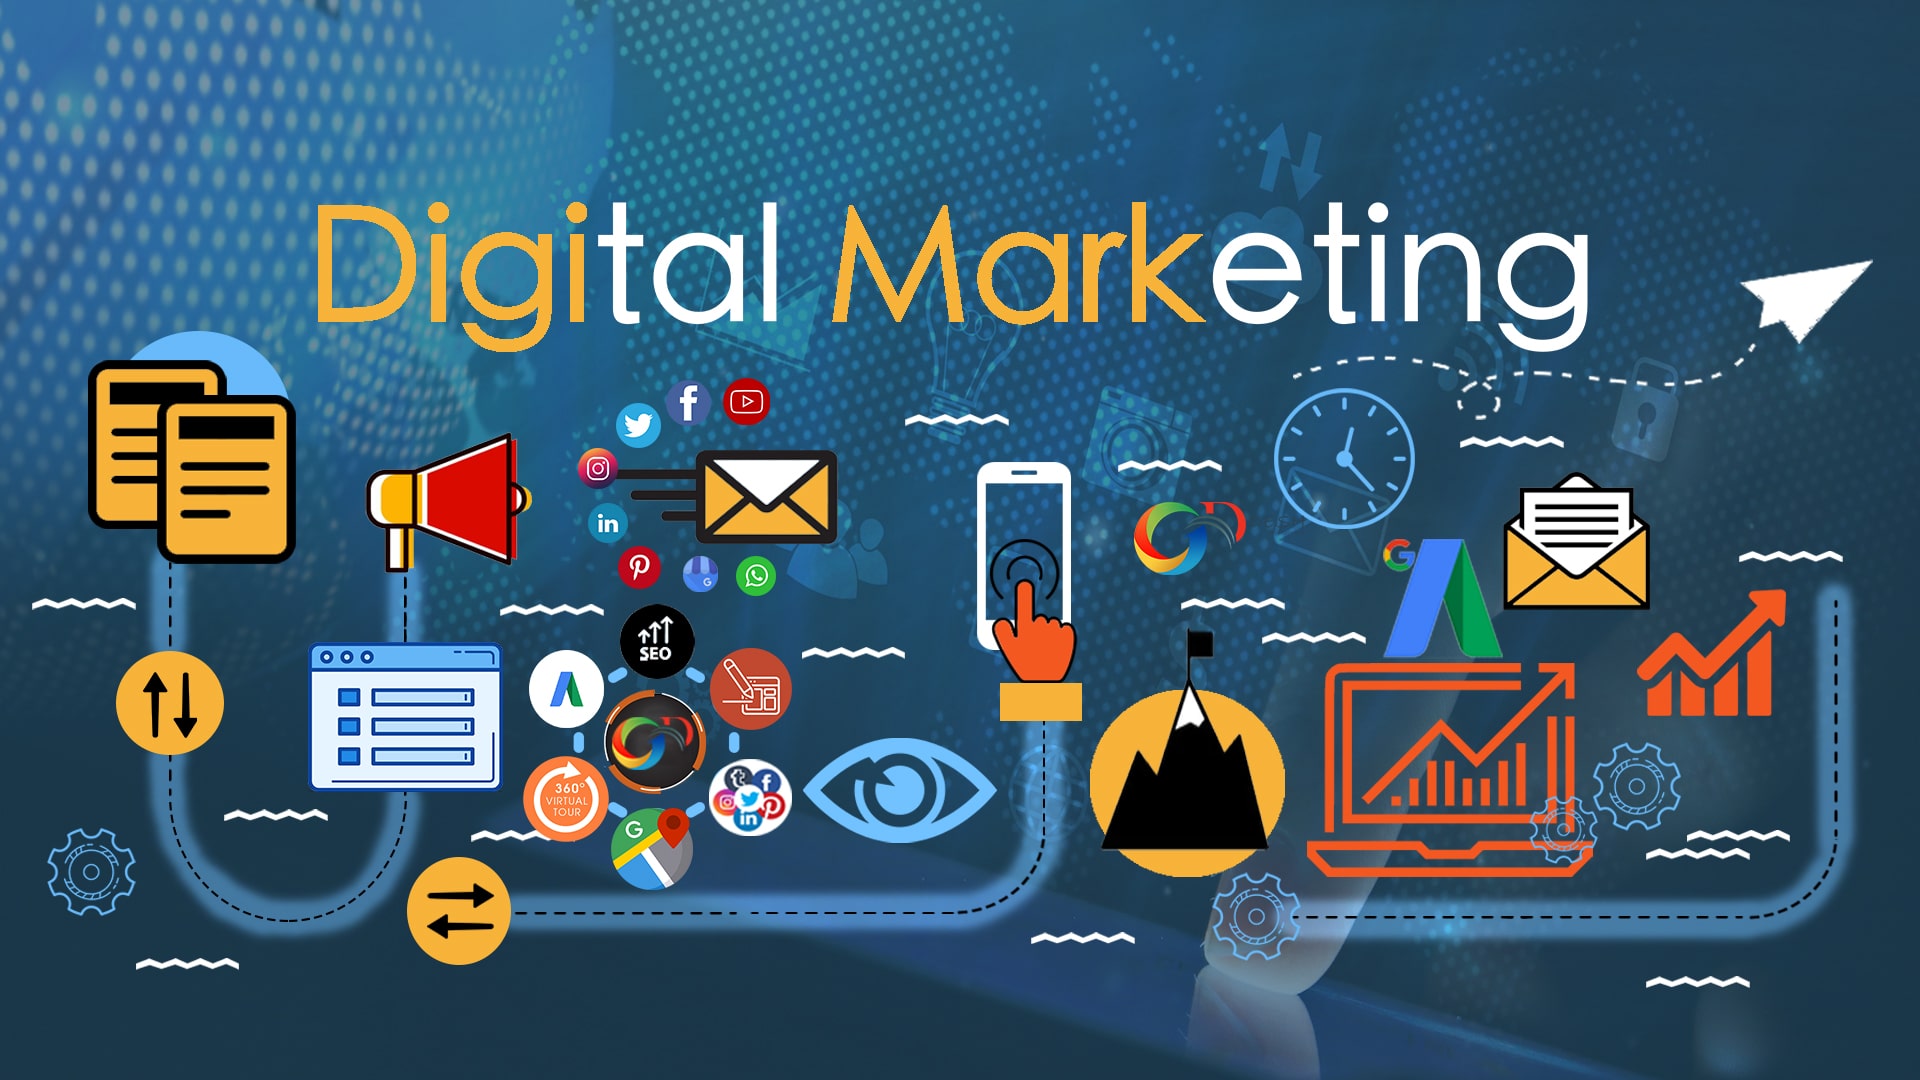 digital marketing consultant in india, digital marketing for consulting firms, digital marketing consultant, digital marketing services, best digital marketing consultant, digital marketing consultant website,